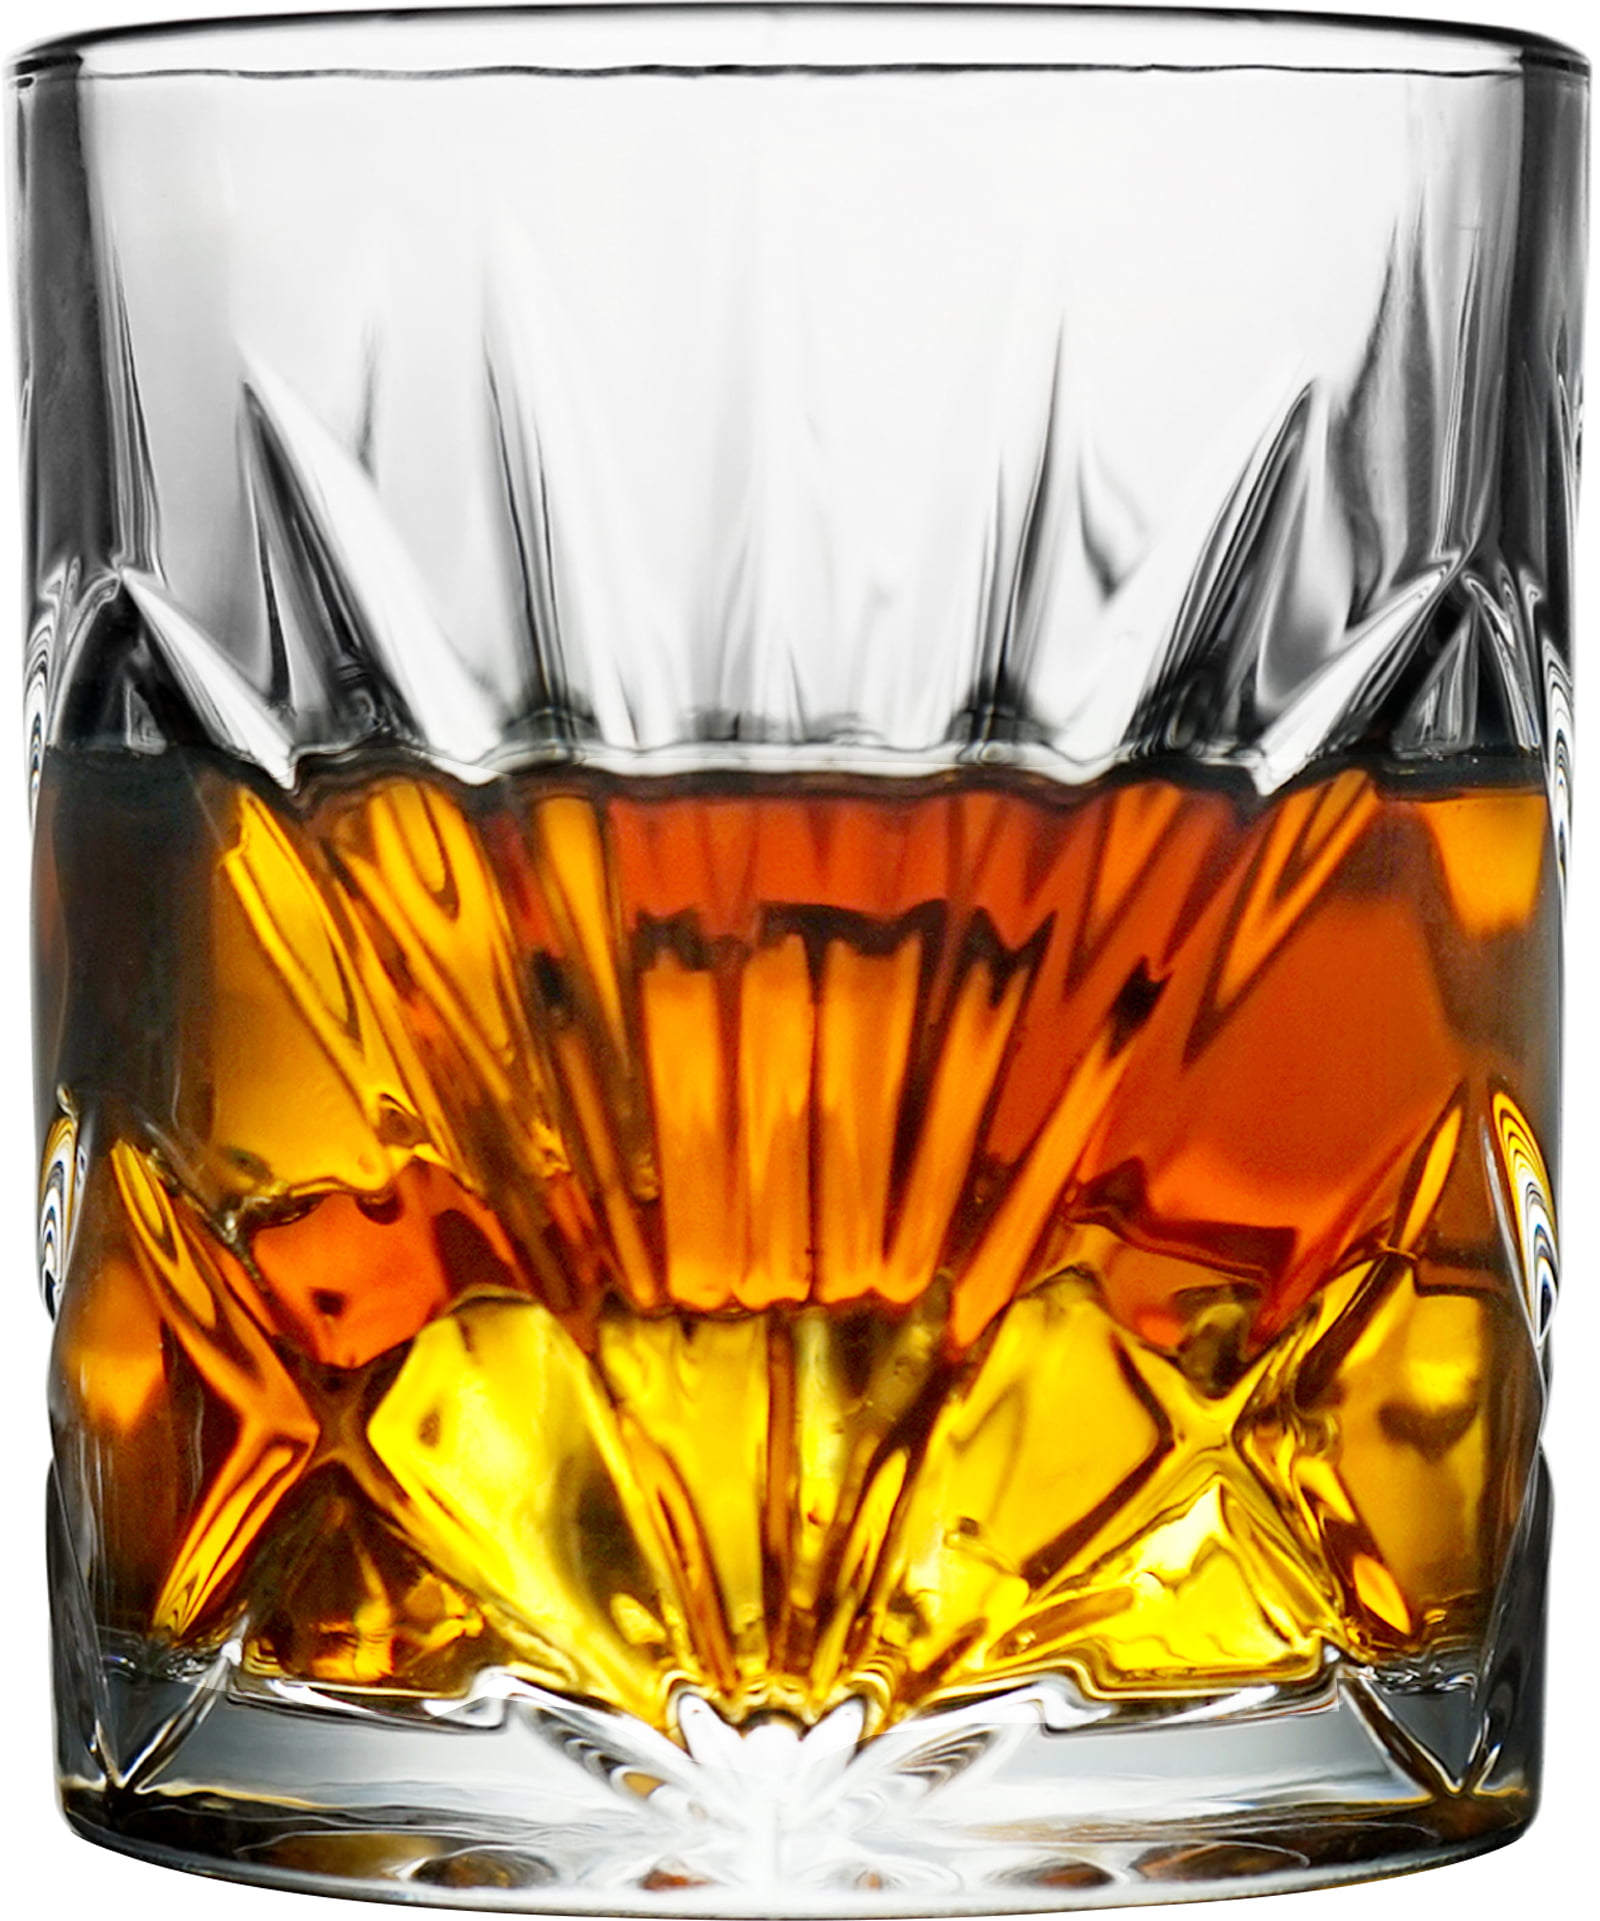 QAPPDA Old Fashioned Whiskey Glasses Set of 12,10oz Rotating Glass  Tumbler,Premium Vintage Rocks Bar…See more QAPPDA Old Fashioned Whiskey  Glasses Set